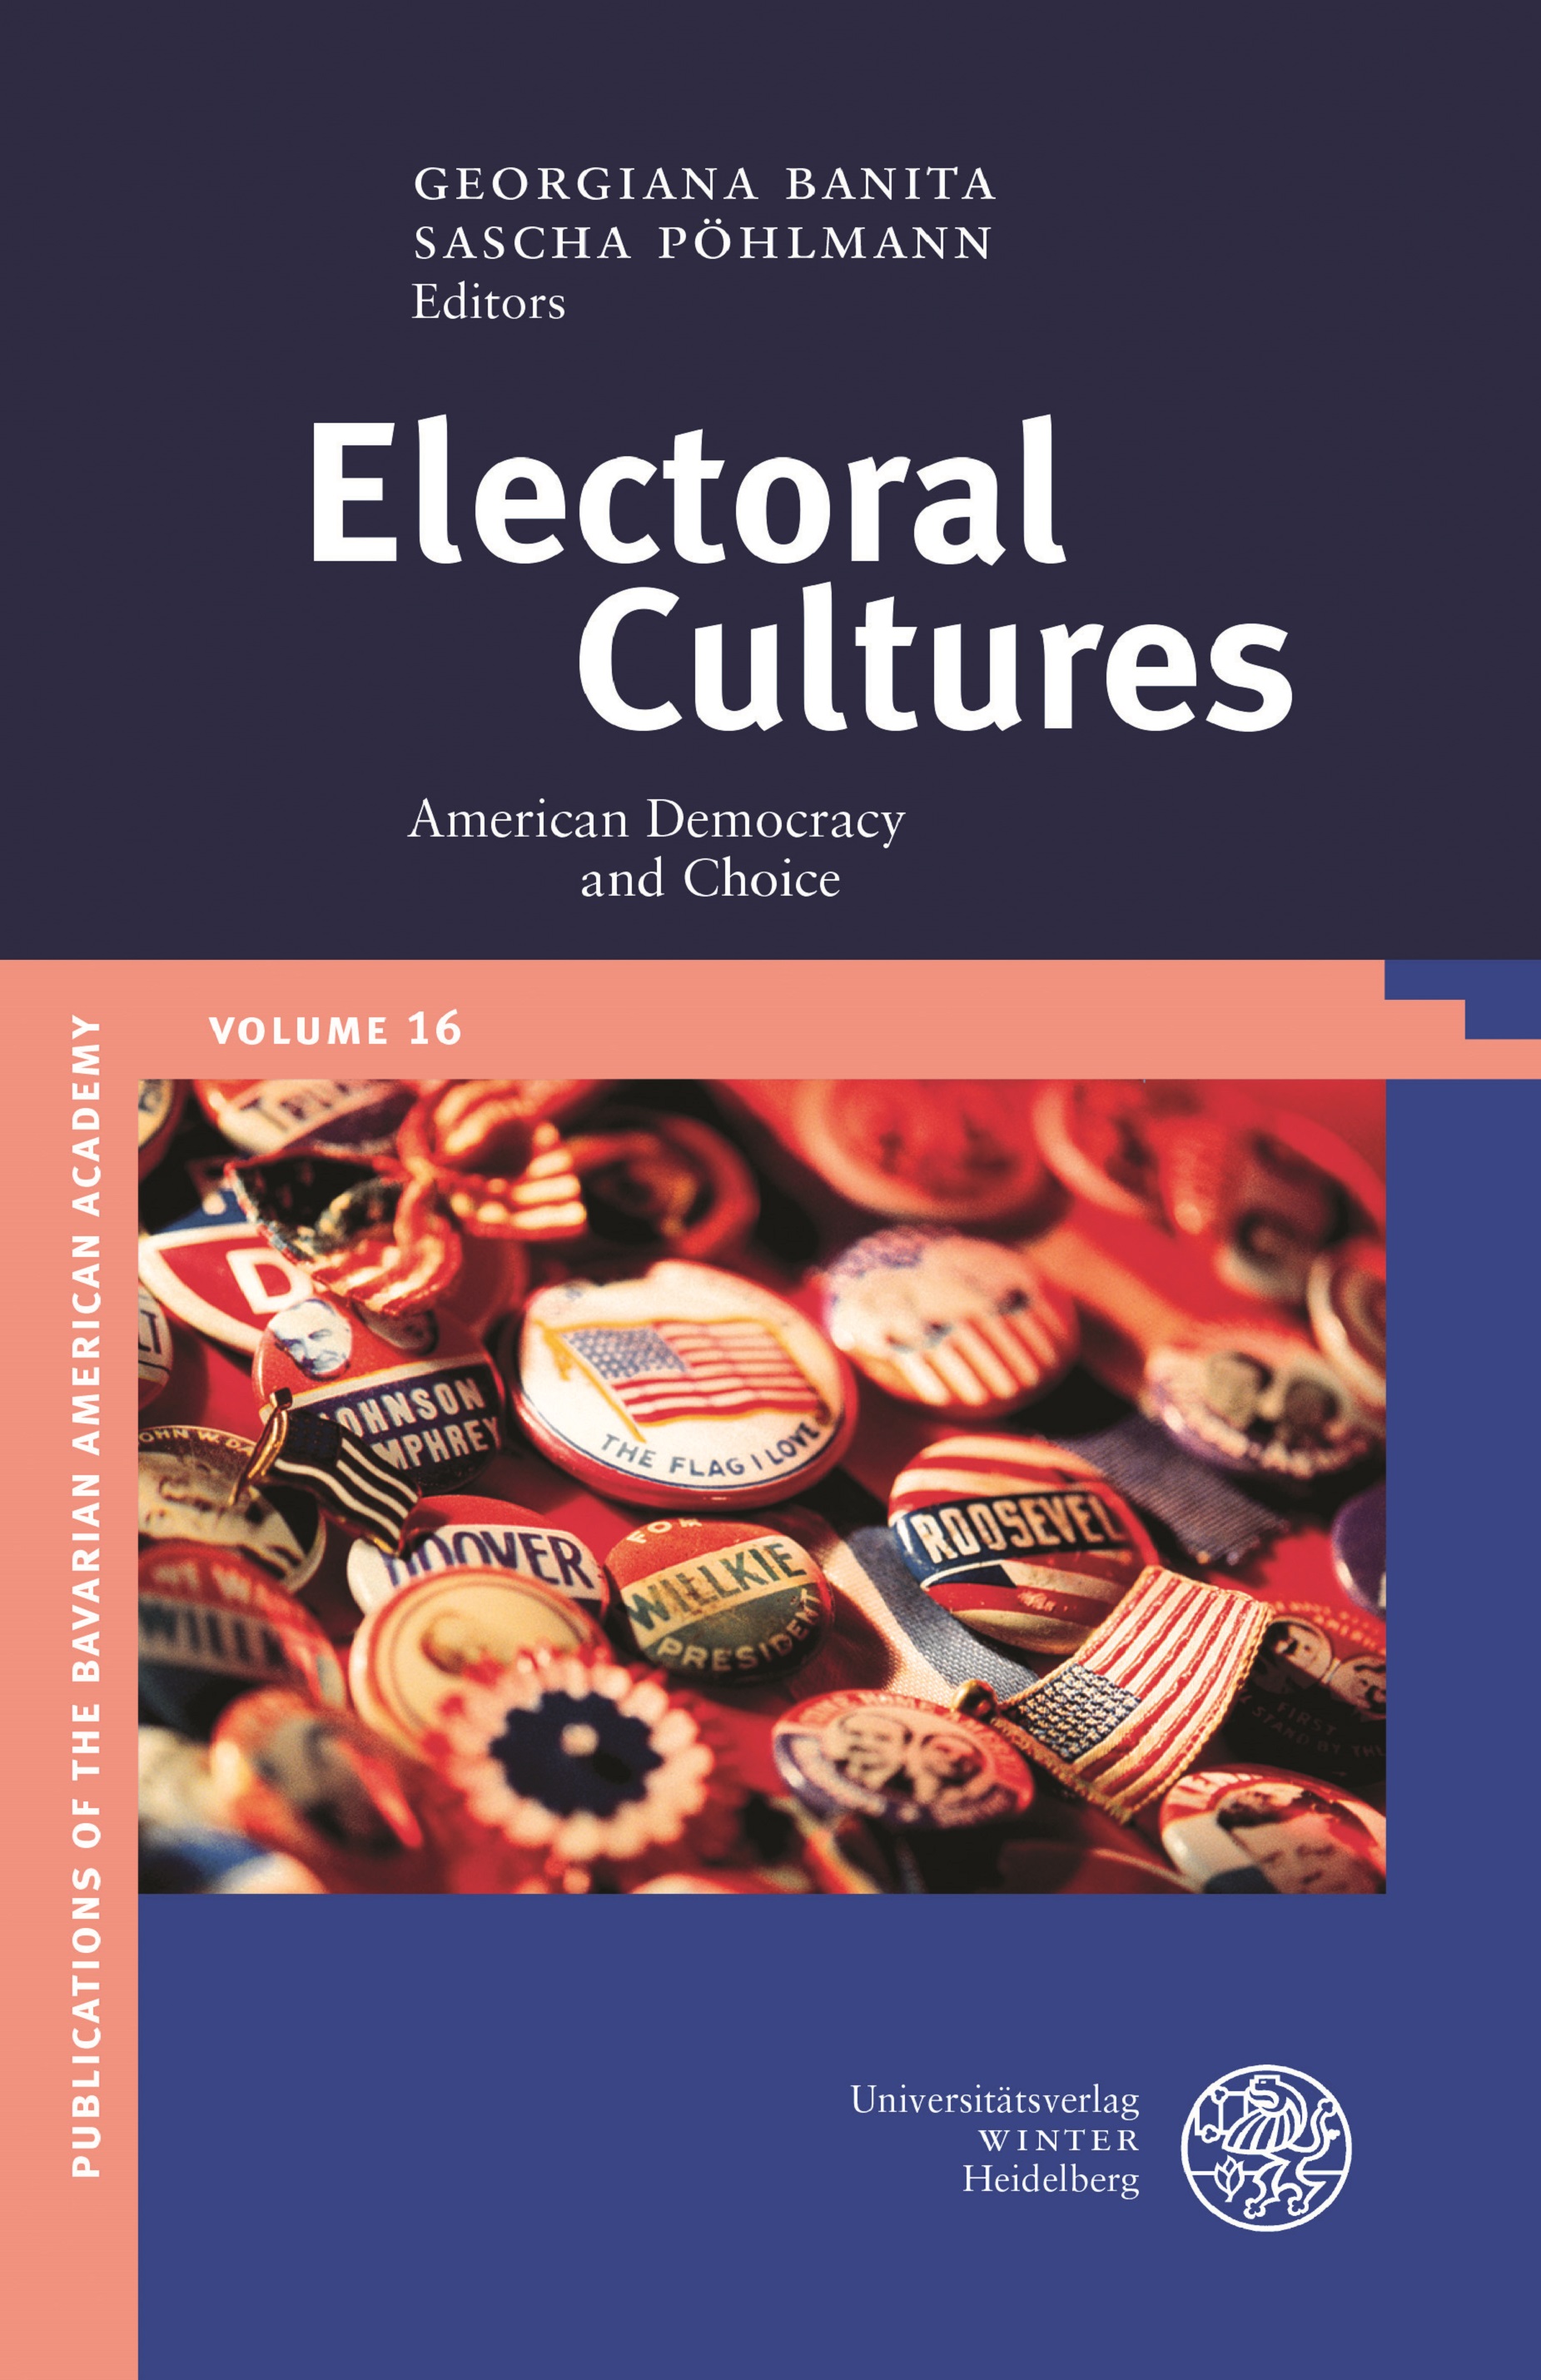 BAA publication Vol. 16 Electoral Cultures: American Democracy and Choice